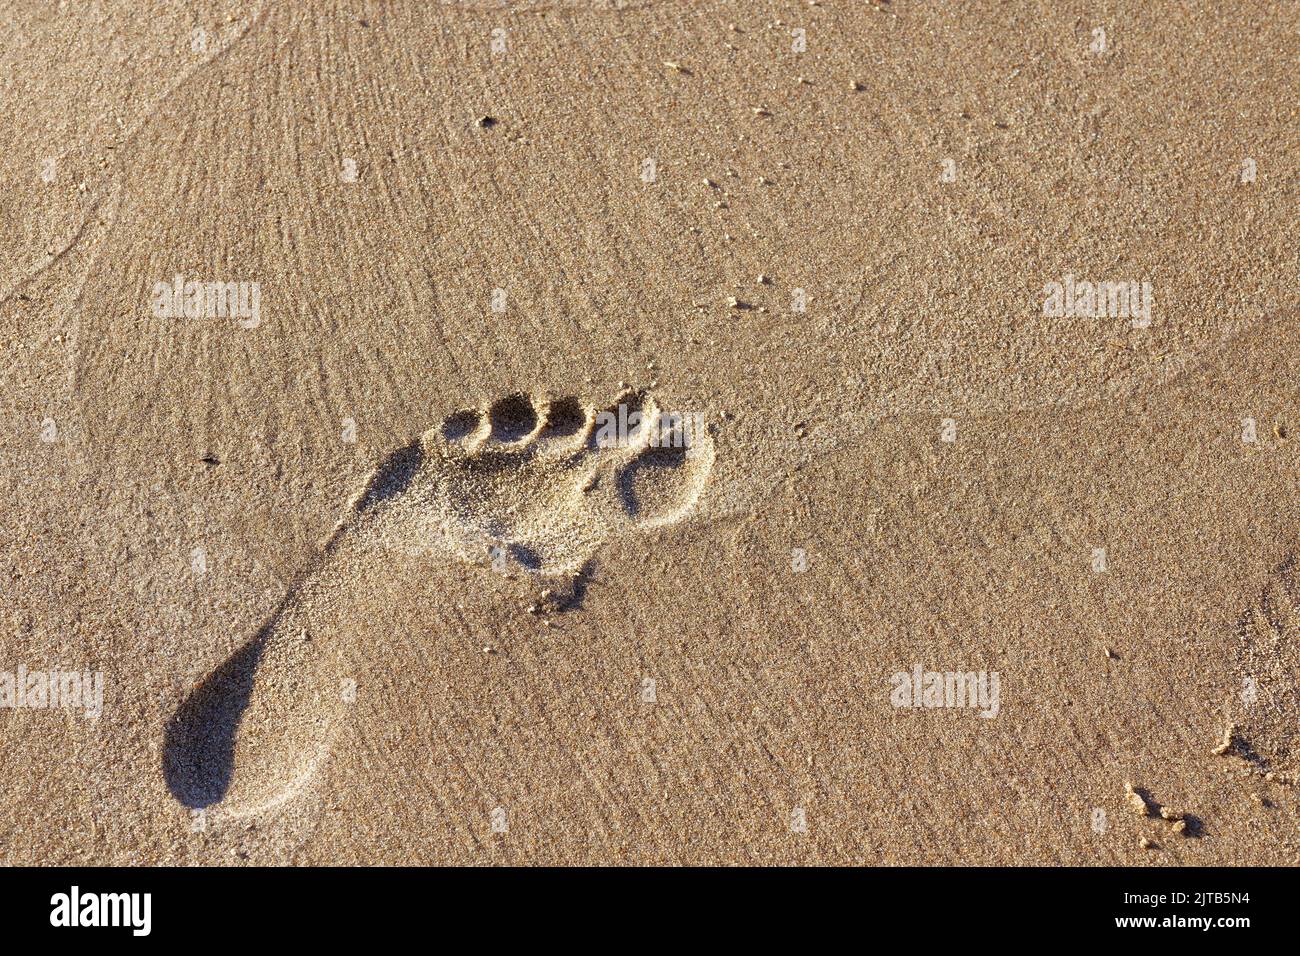 Closeup human footprint on sandy beach. Copyspace. Stock Photo